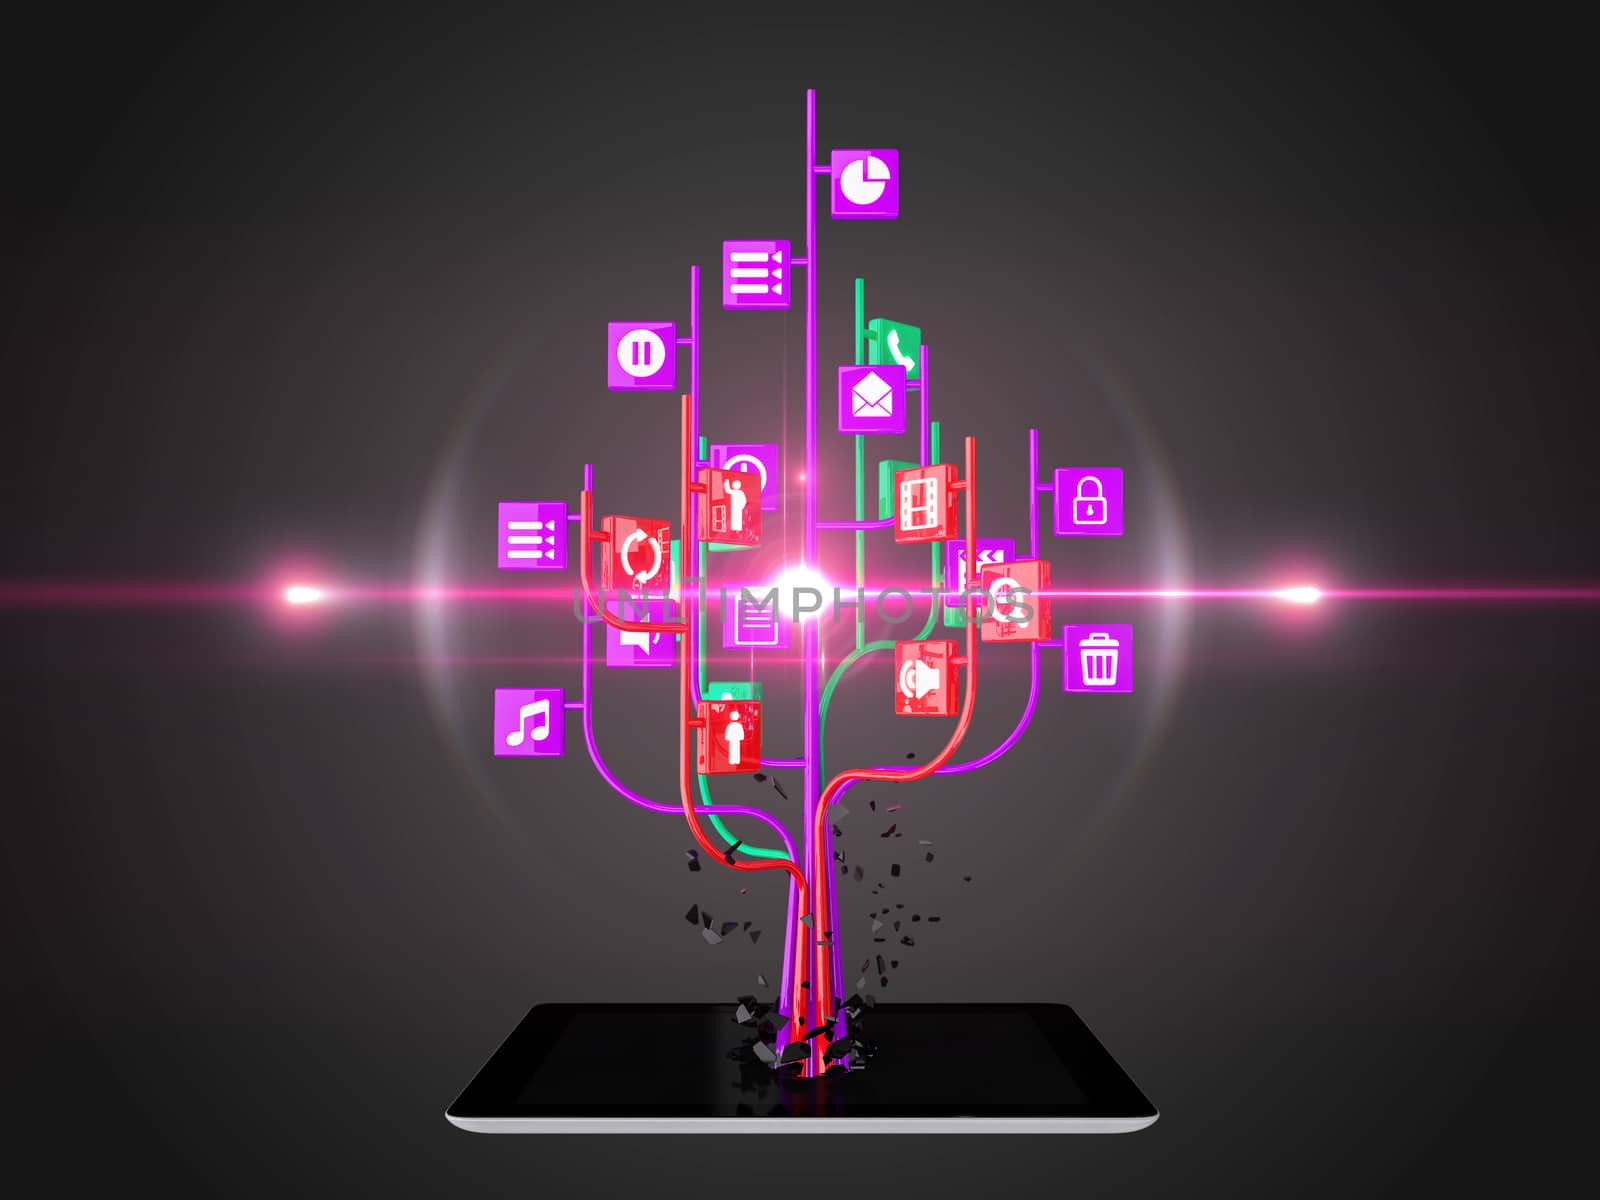 Social media icons set in tree shape on Modern black tablet pc, technology background